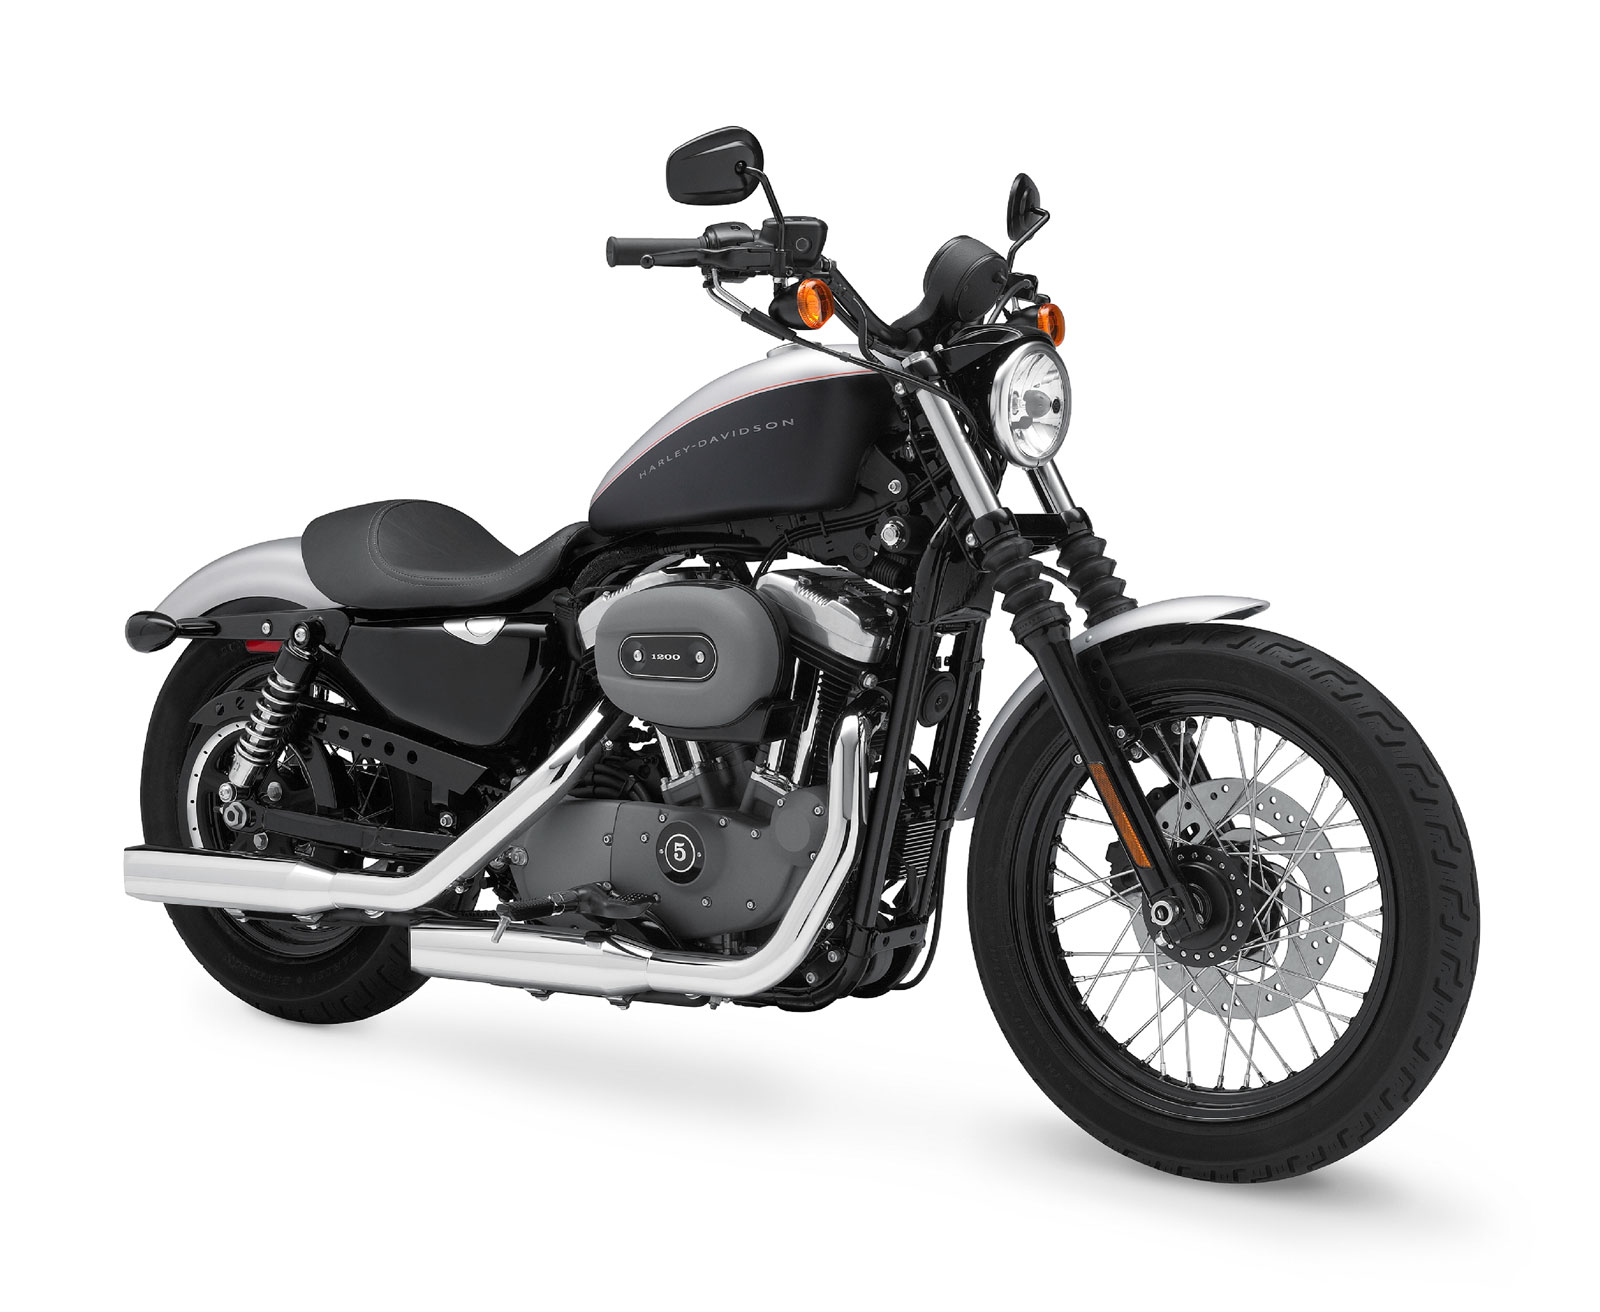 Top Motorcycle & Review: 2009 Harley-Davidson Sportster 1200 Nightster